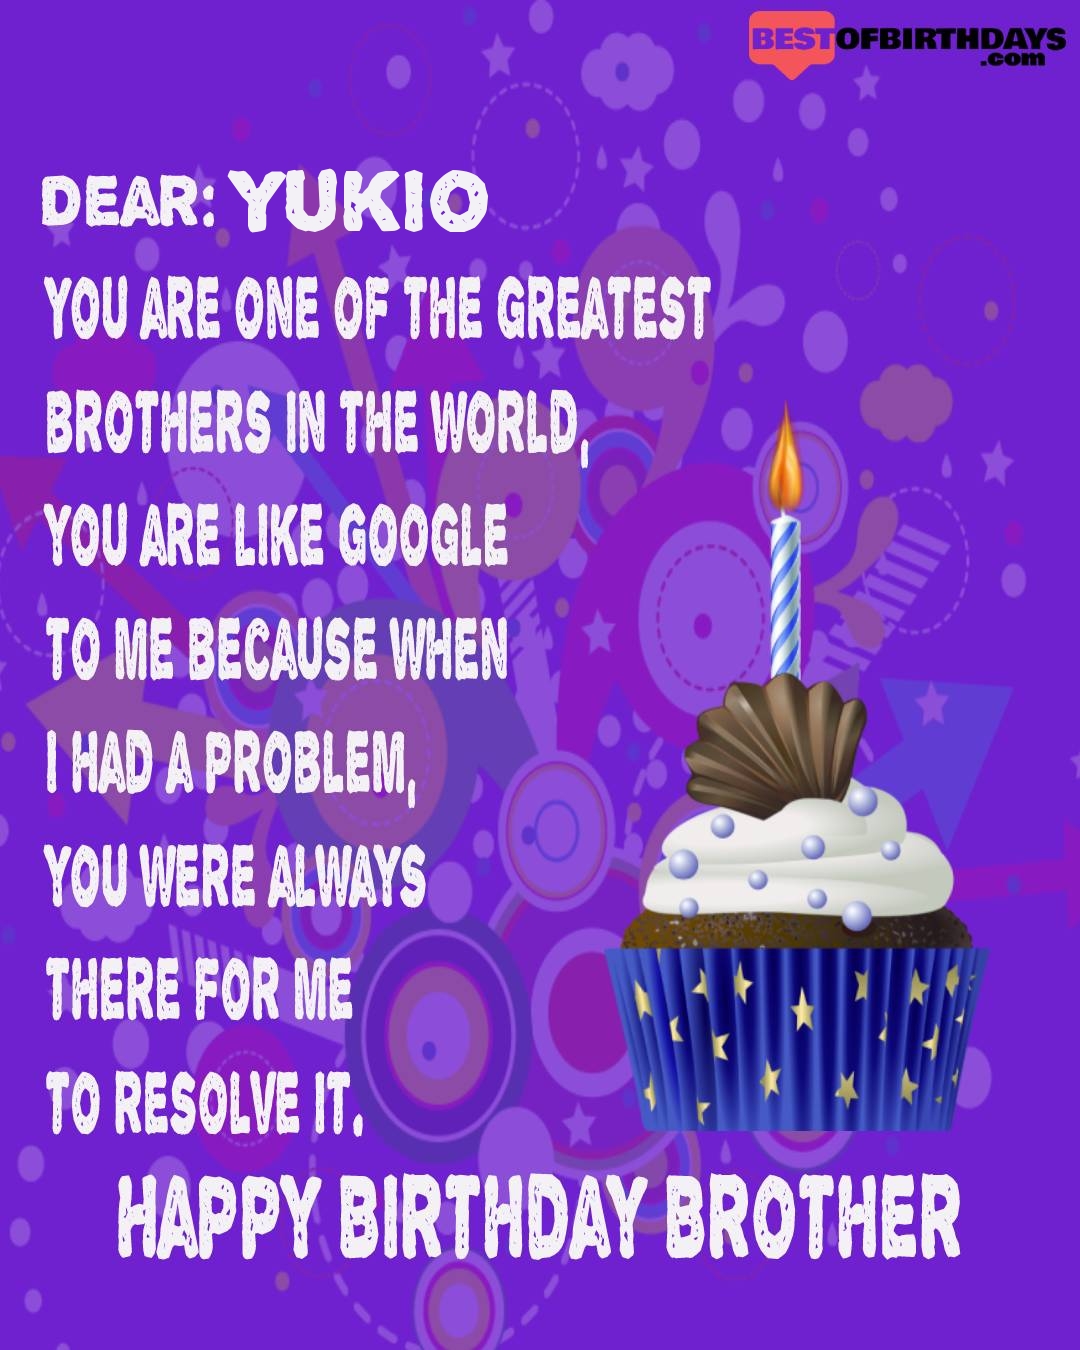 Happy birthday yukio bhai brother bro